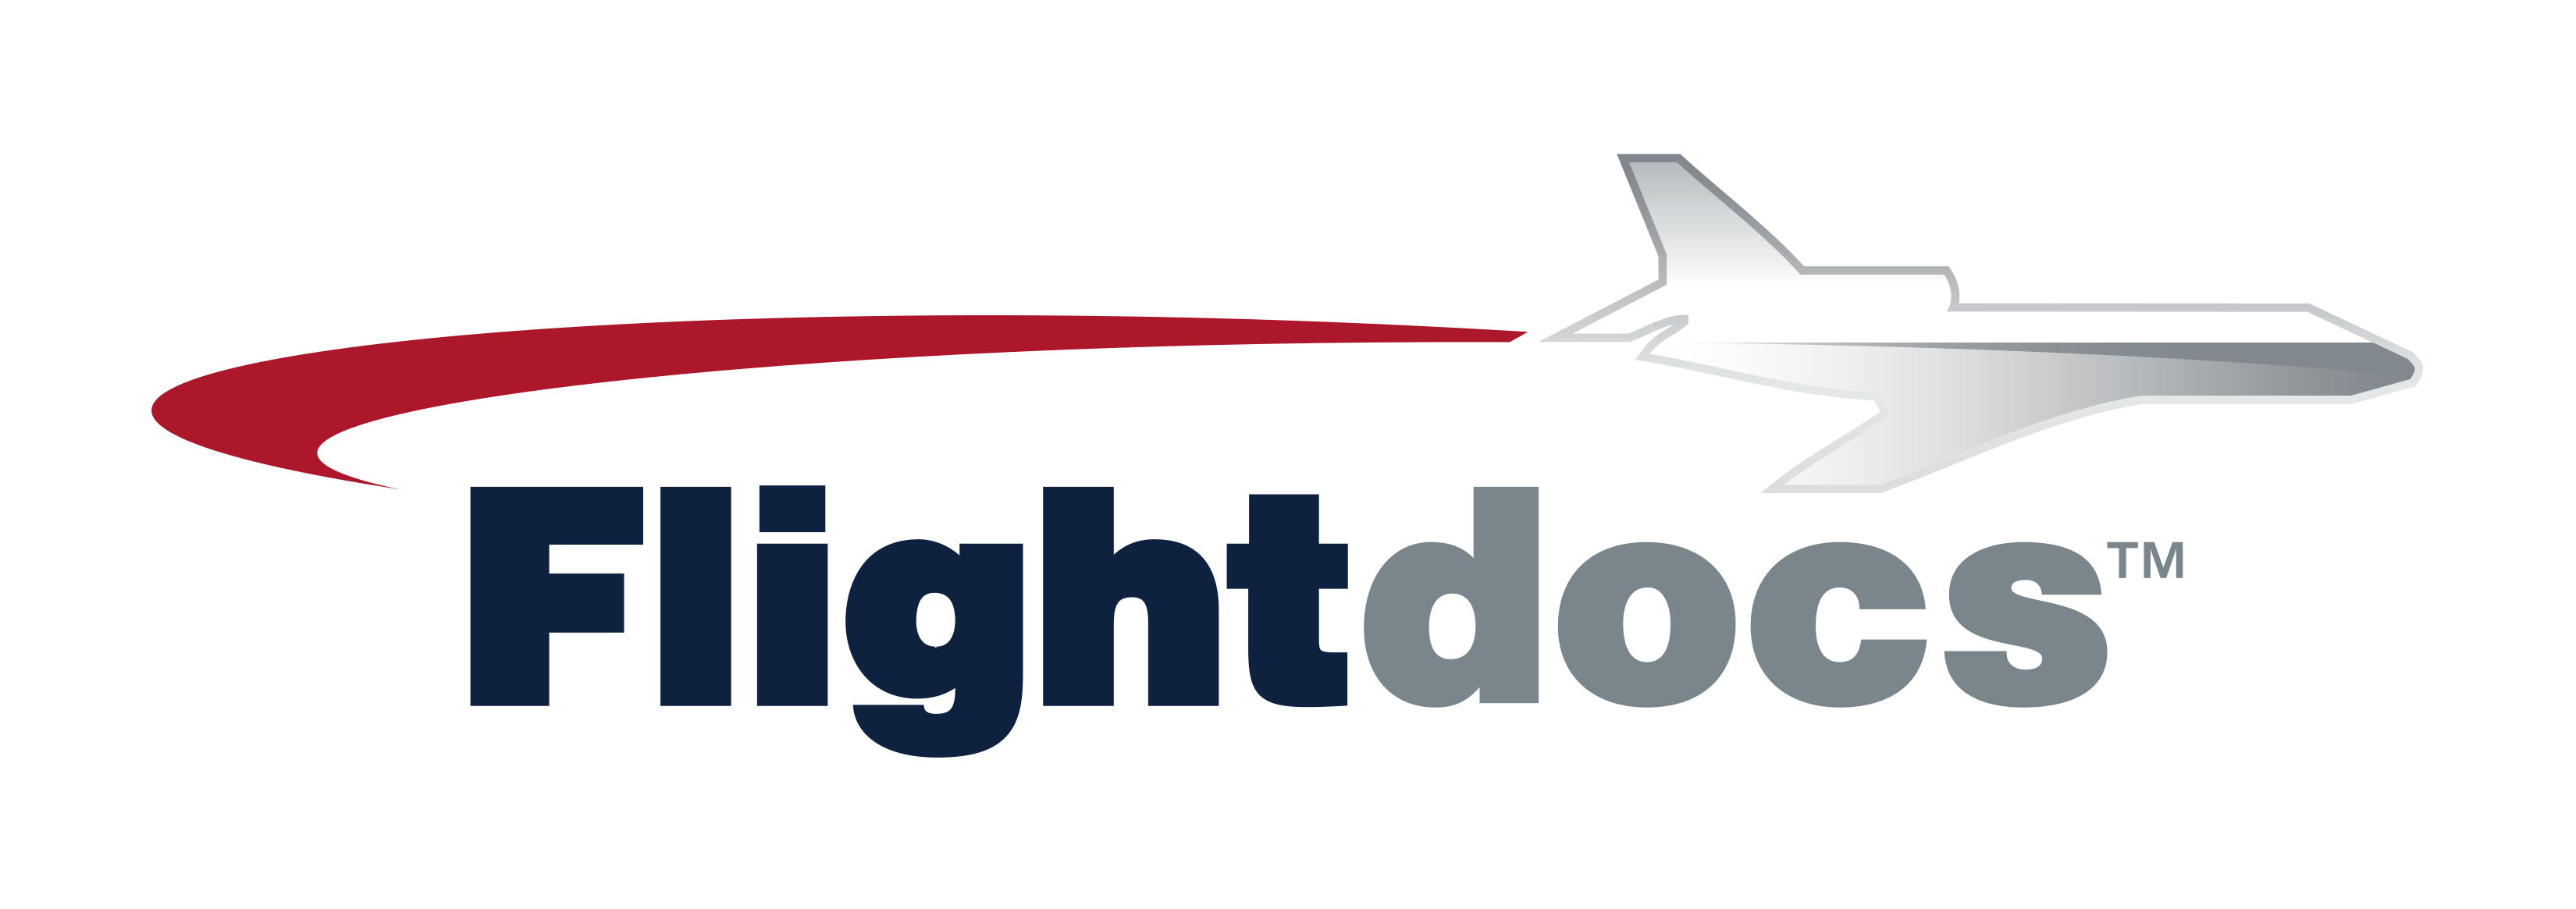 Flightdocs LLC (now part of ATP) logo